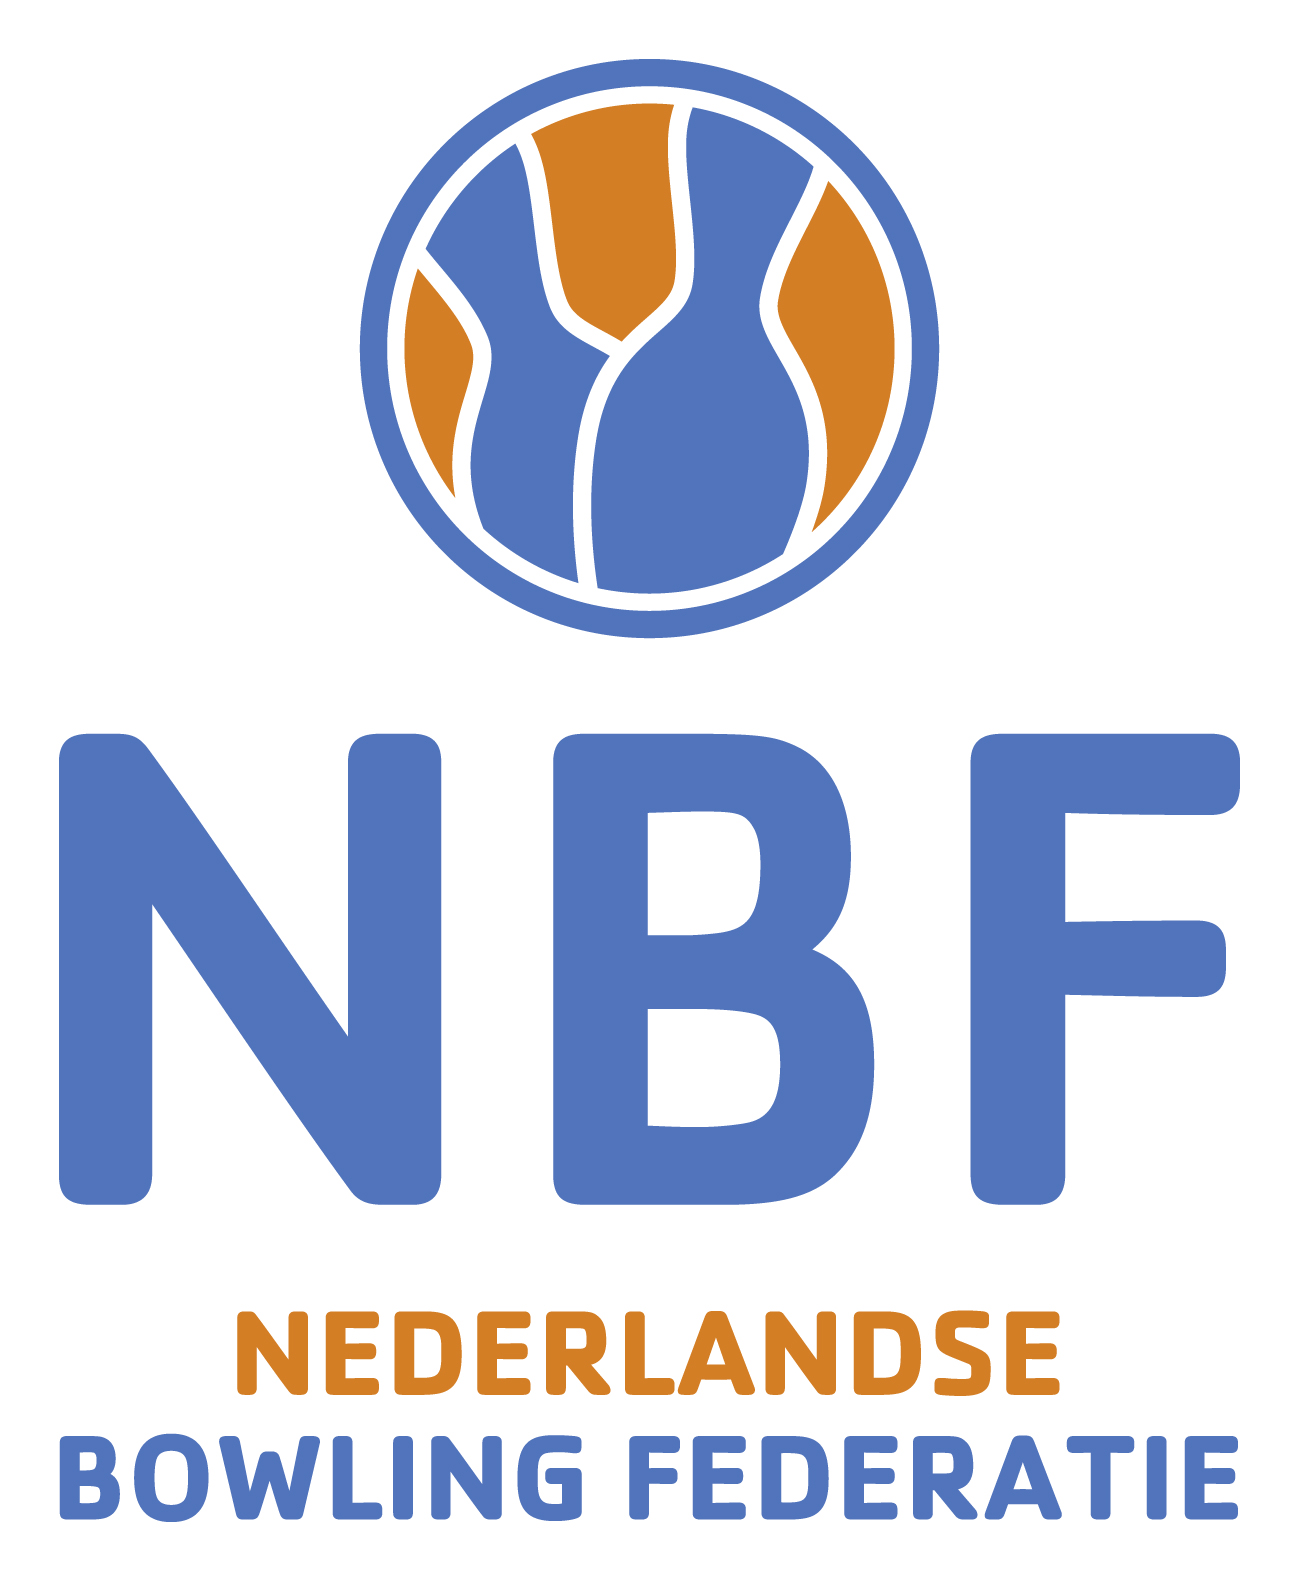 NBF Trotse partner van Sportunity in Apeldoorn